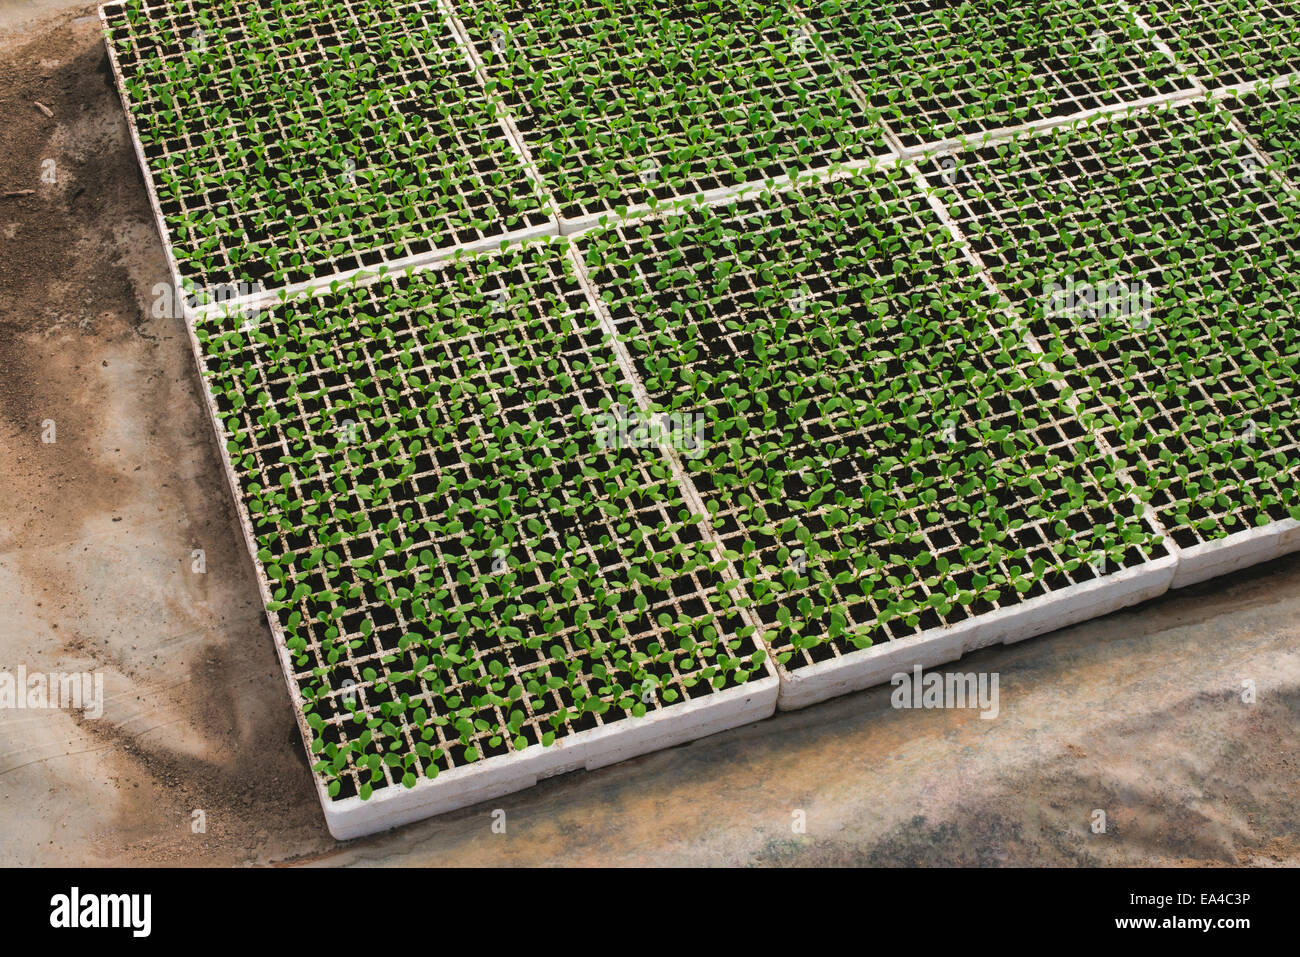 Salat-Plantage Sämlinge im Gewächshaus Stockfoto